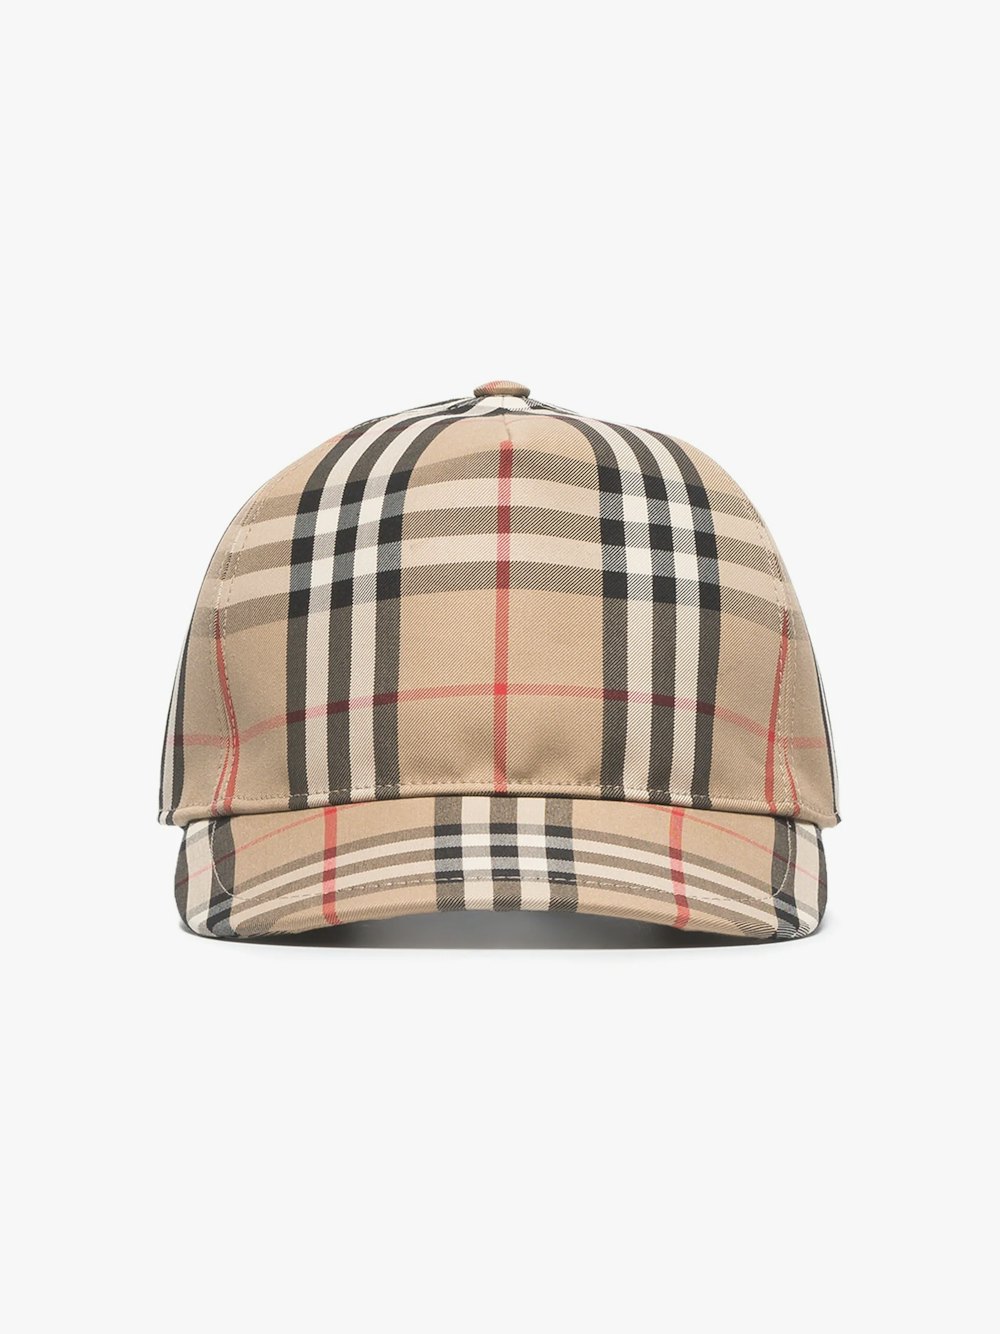 Burberry Beige Vintage Check Baseball Cap